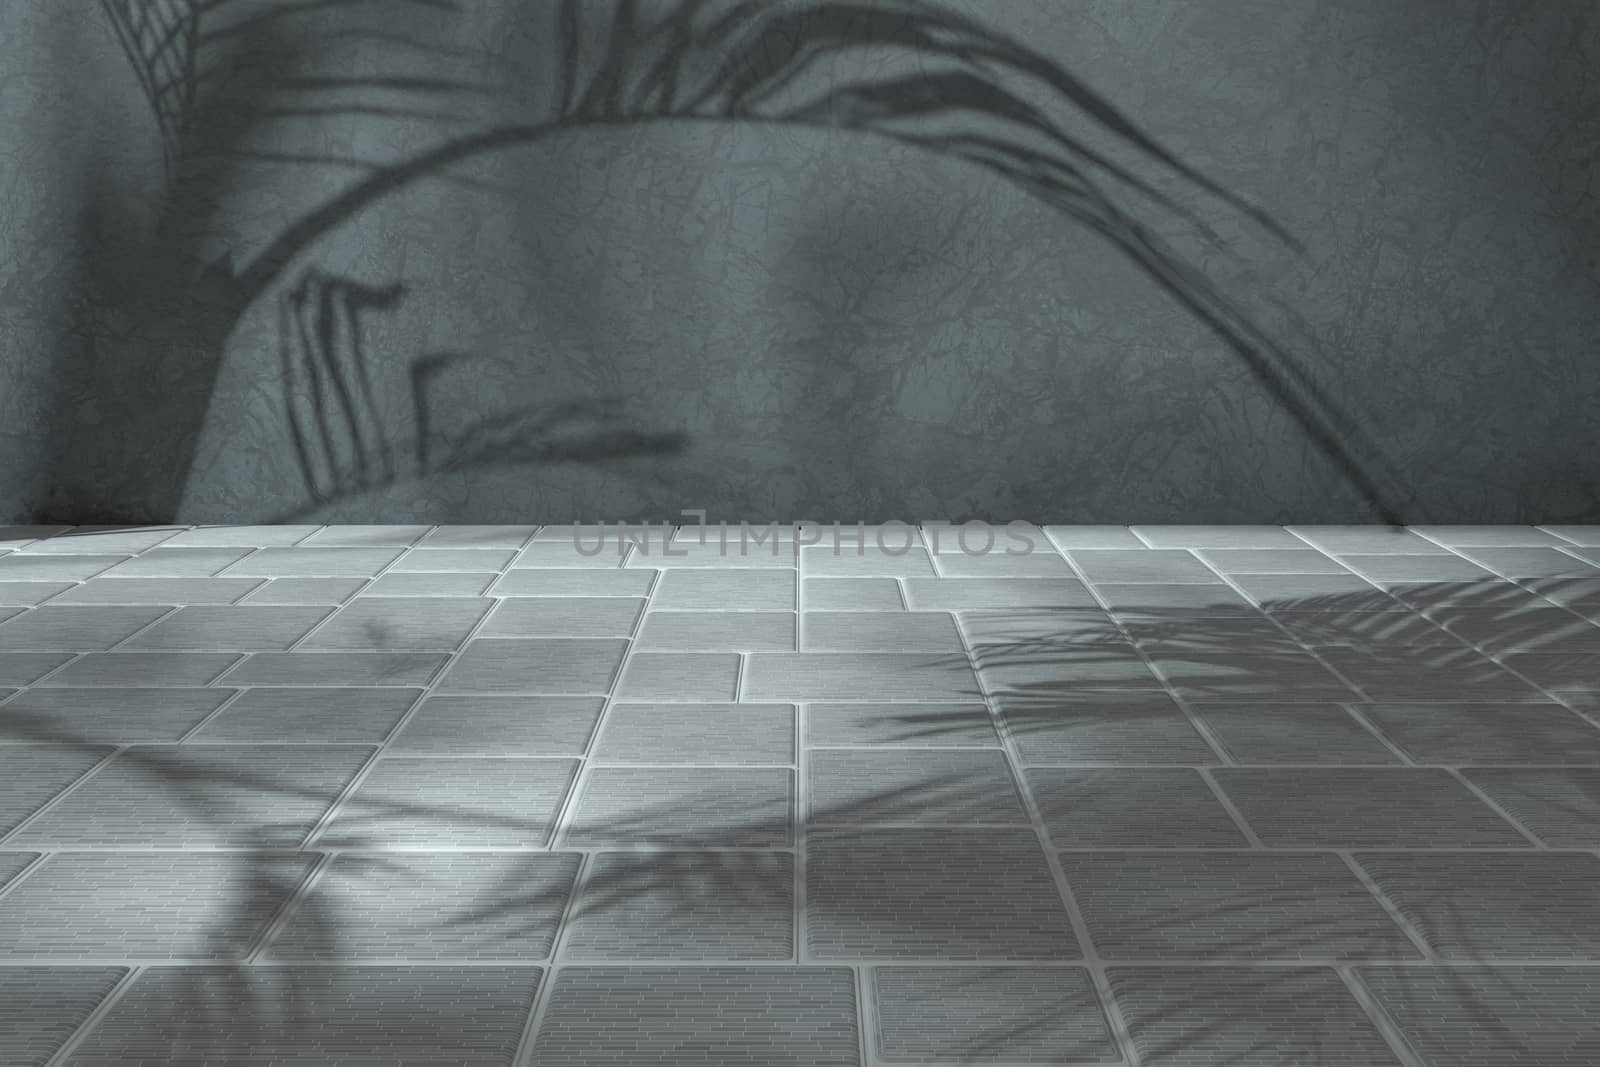 Corner floor with tile cube floor with plant shadows, 3d rendering. Computer digital drawing.